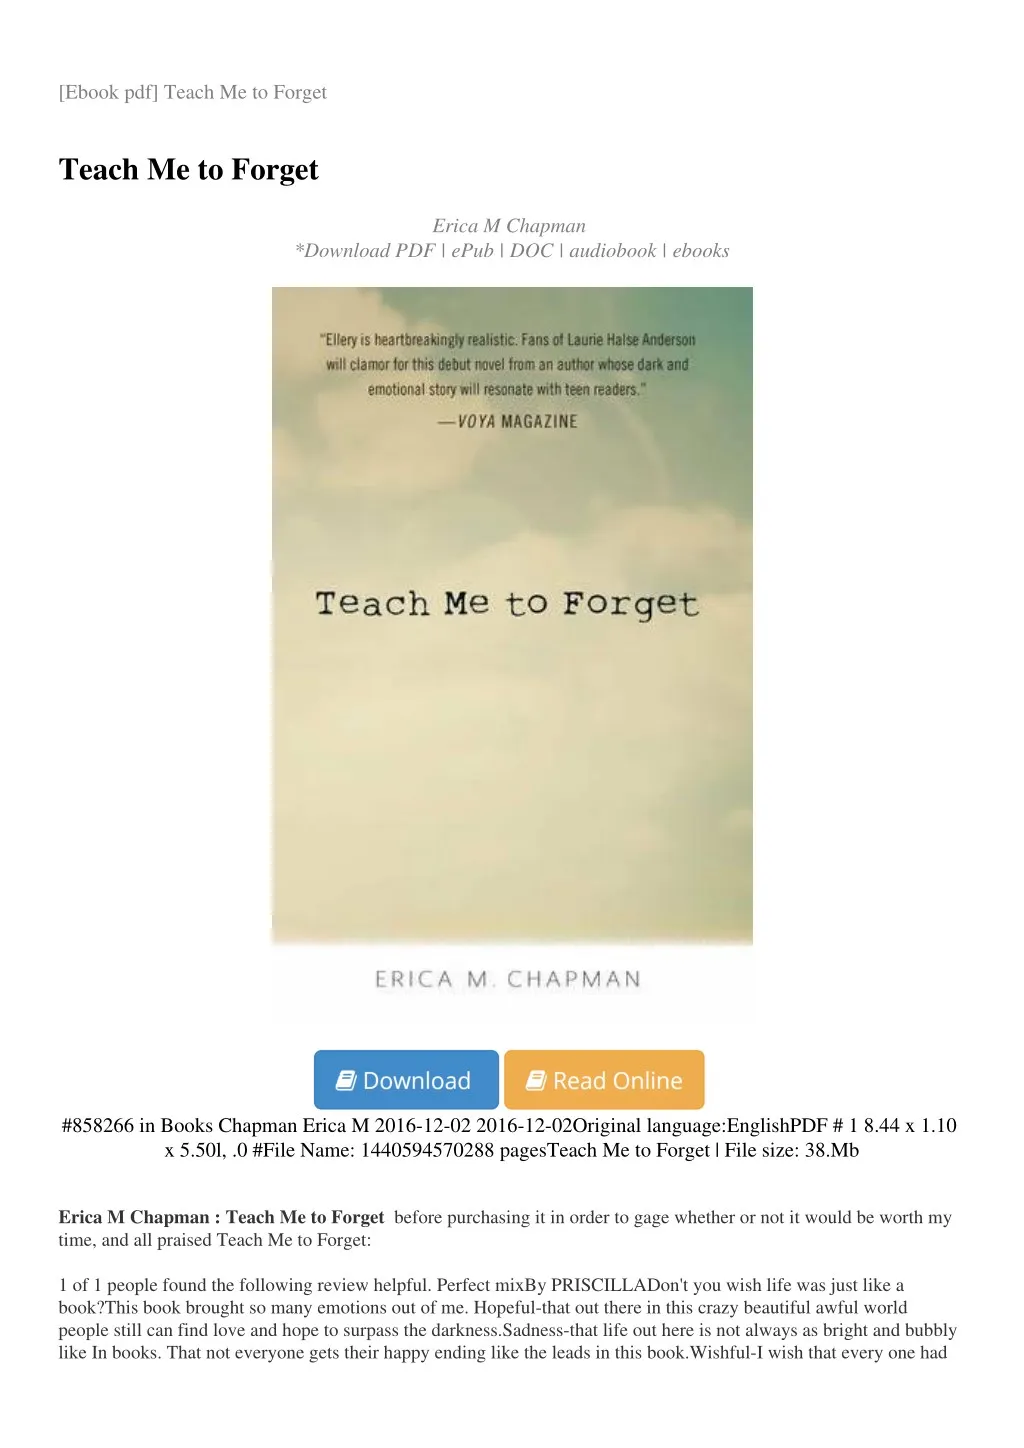 ebook pdf teach me to forget